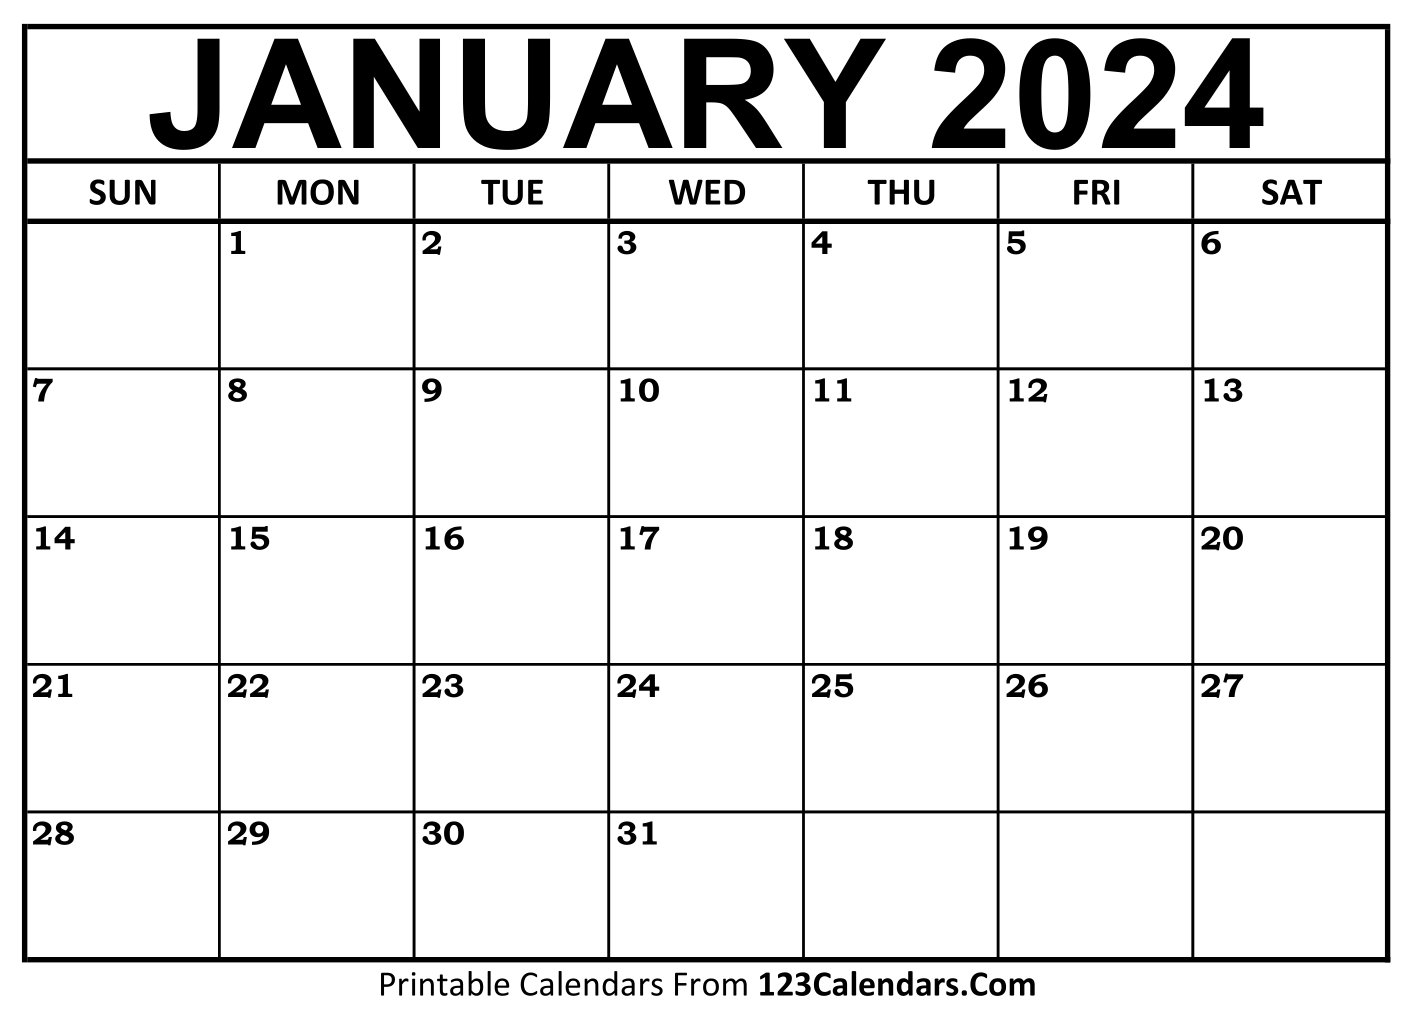 Printable January 2024 Calendar Templates - 123Calendars for Jan 2024 Calendar Free Printable